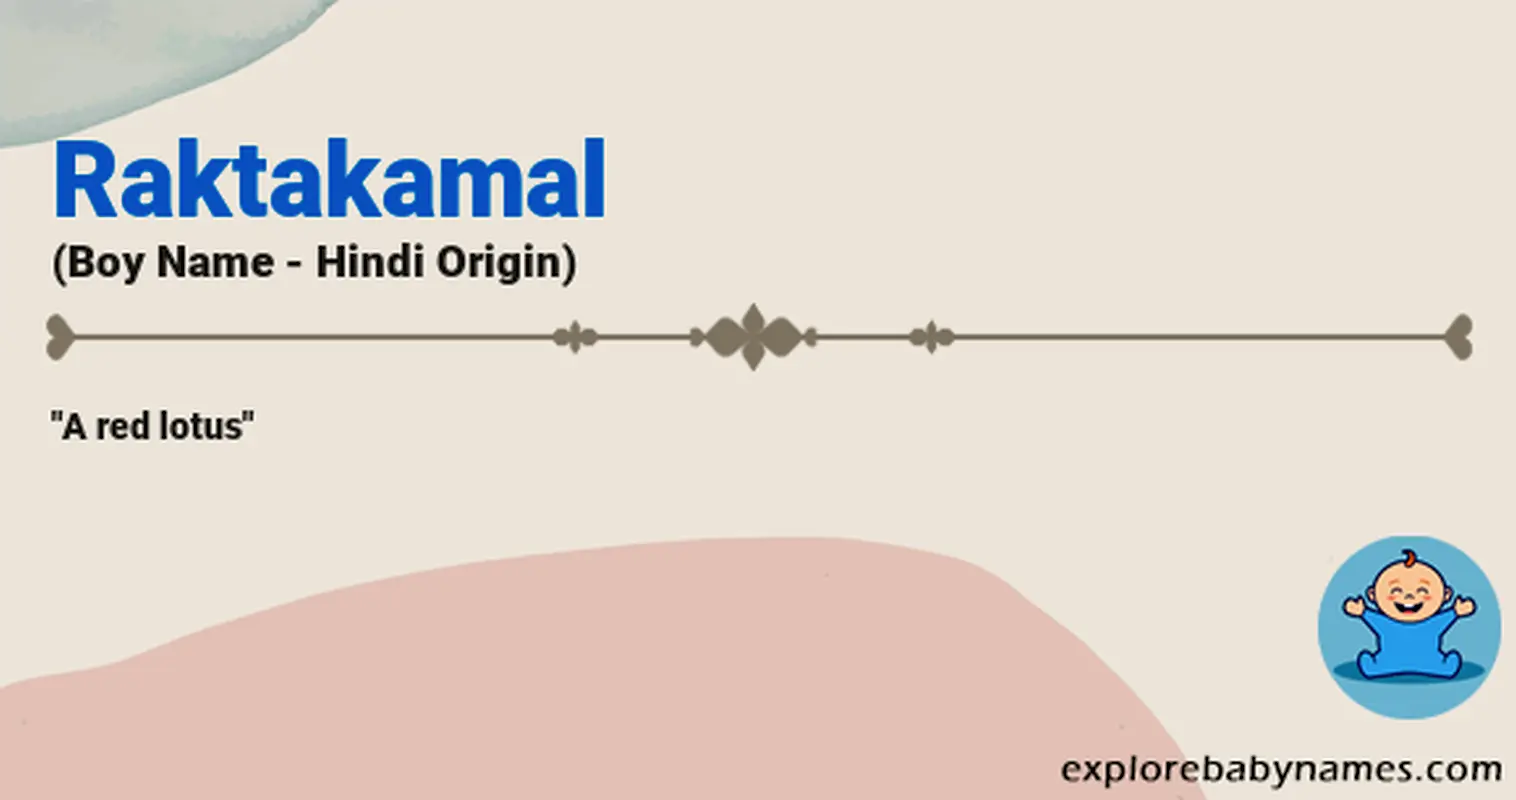 Meaning of Raktakamal